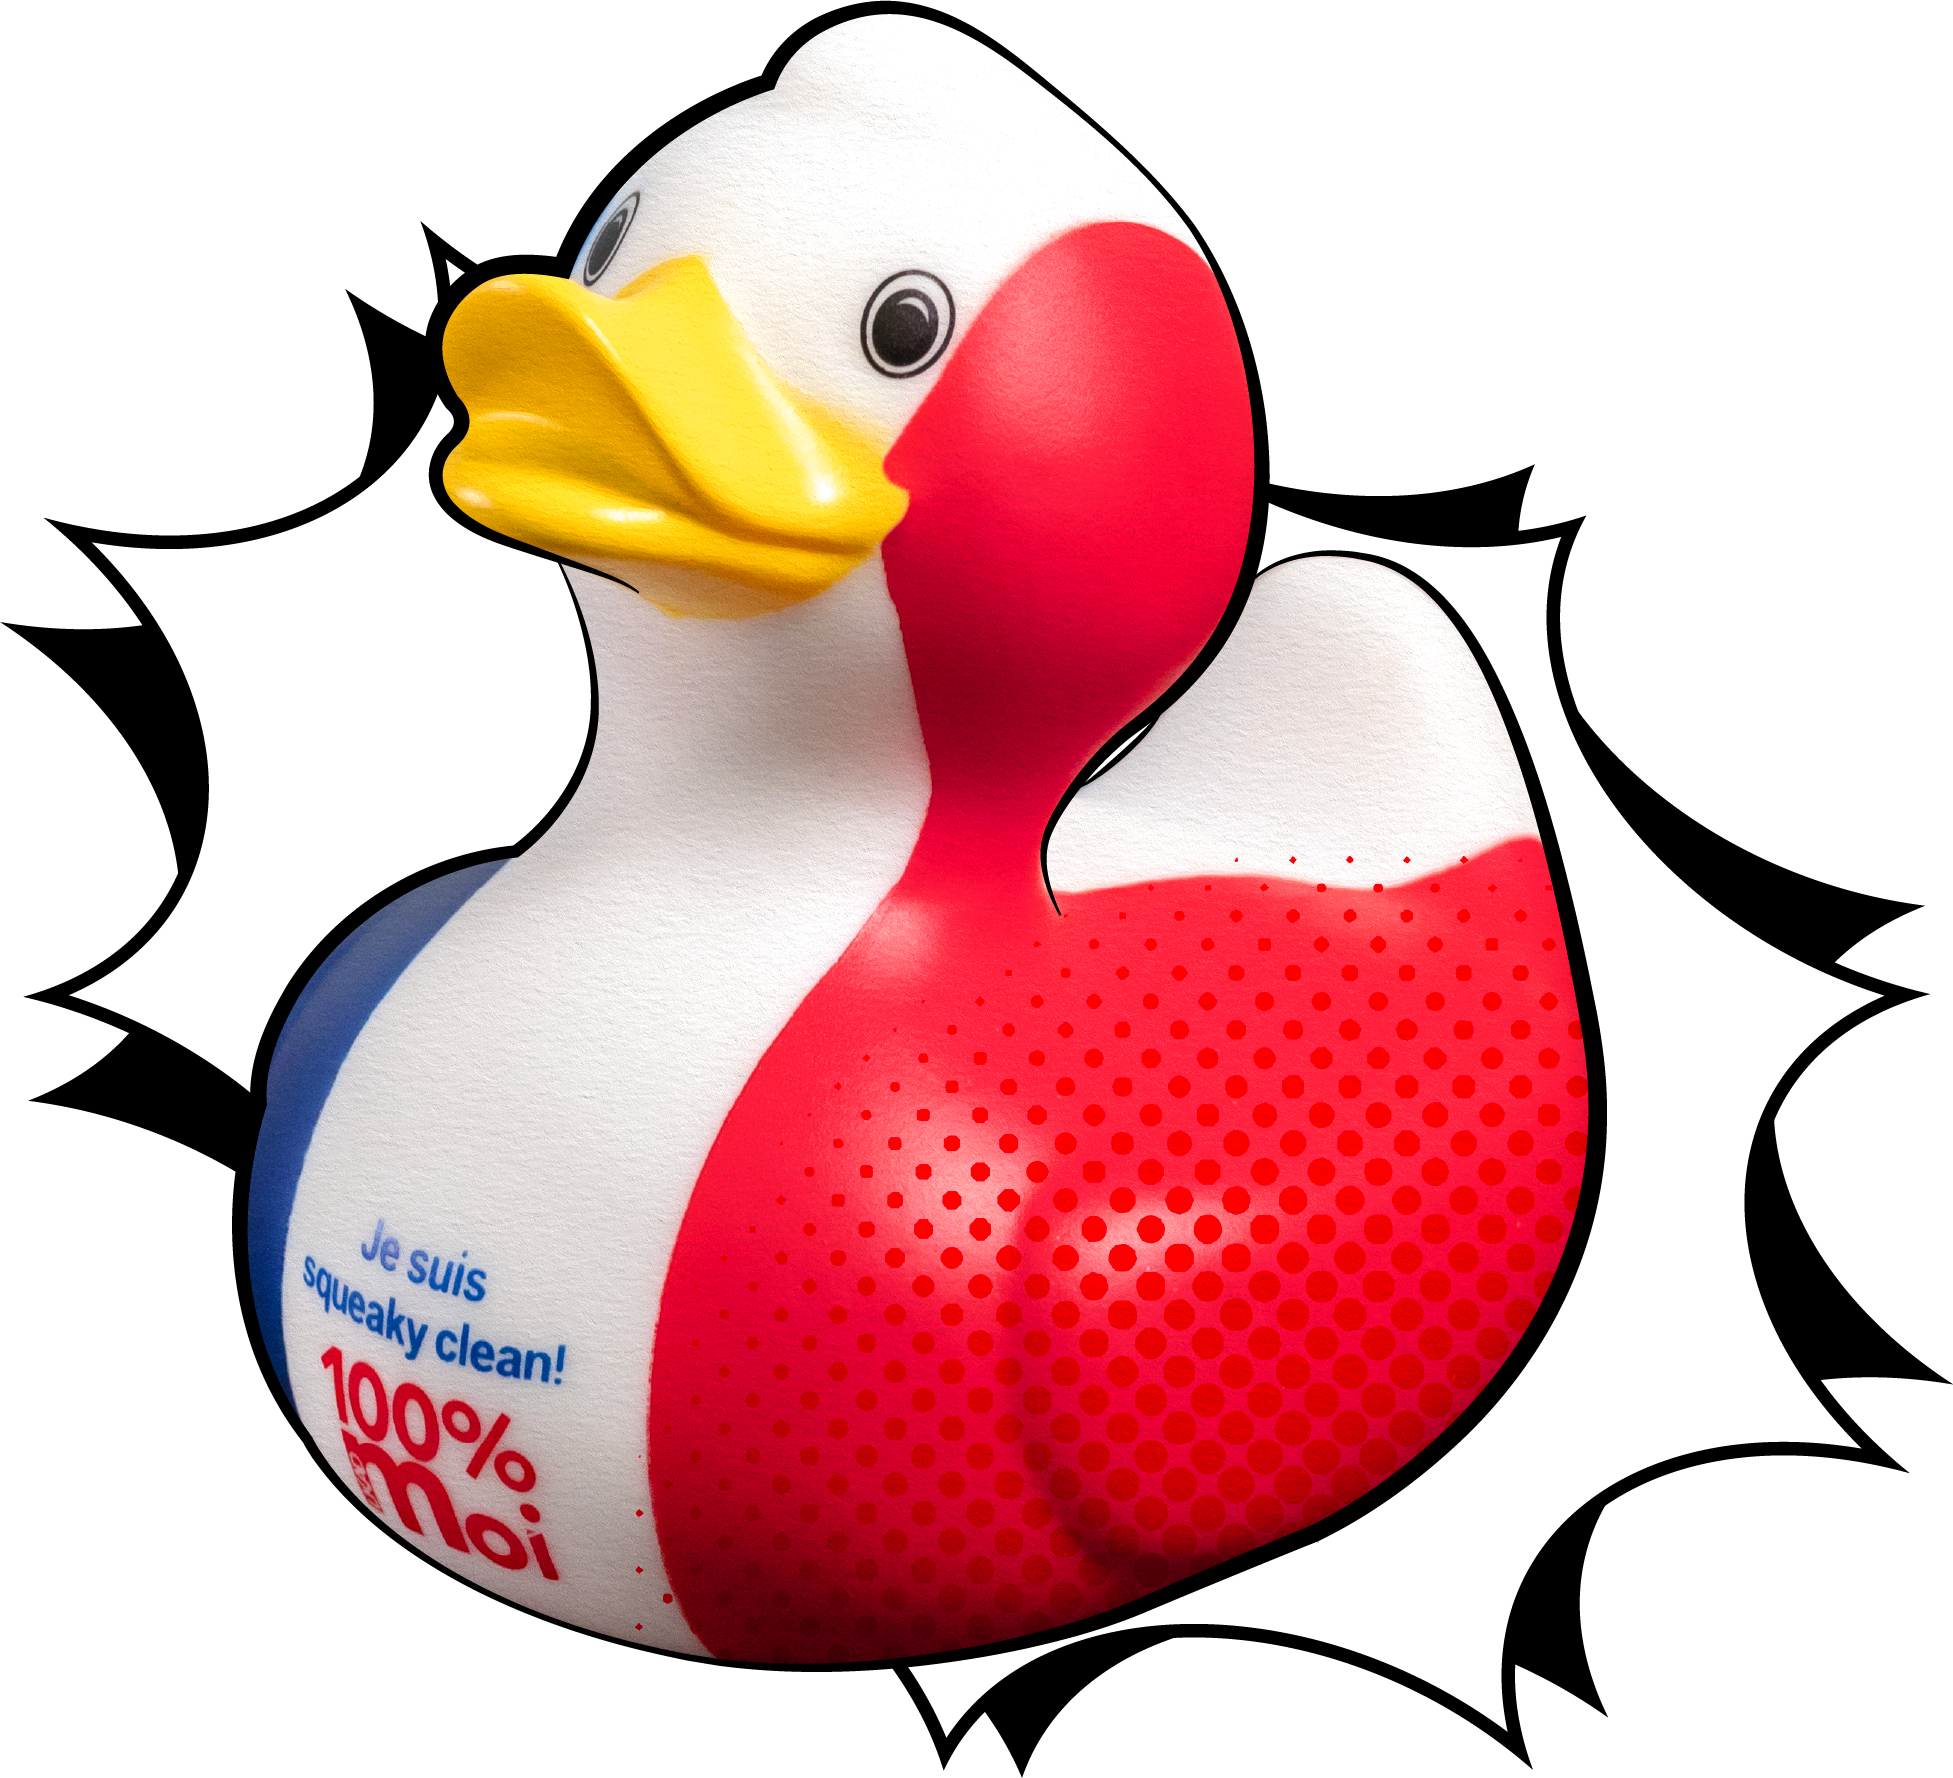 Official Paris 2024 Squeaky clean sport mascot